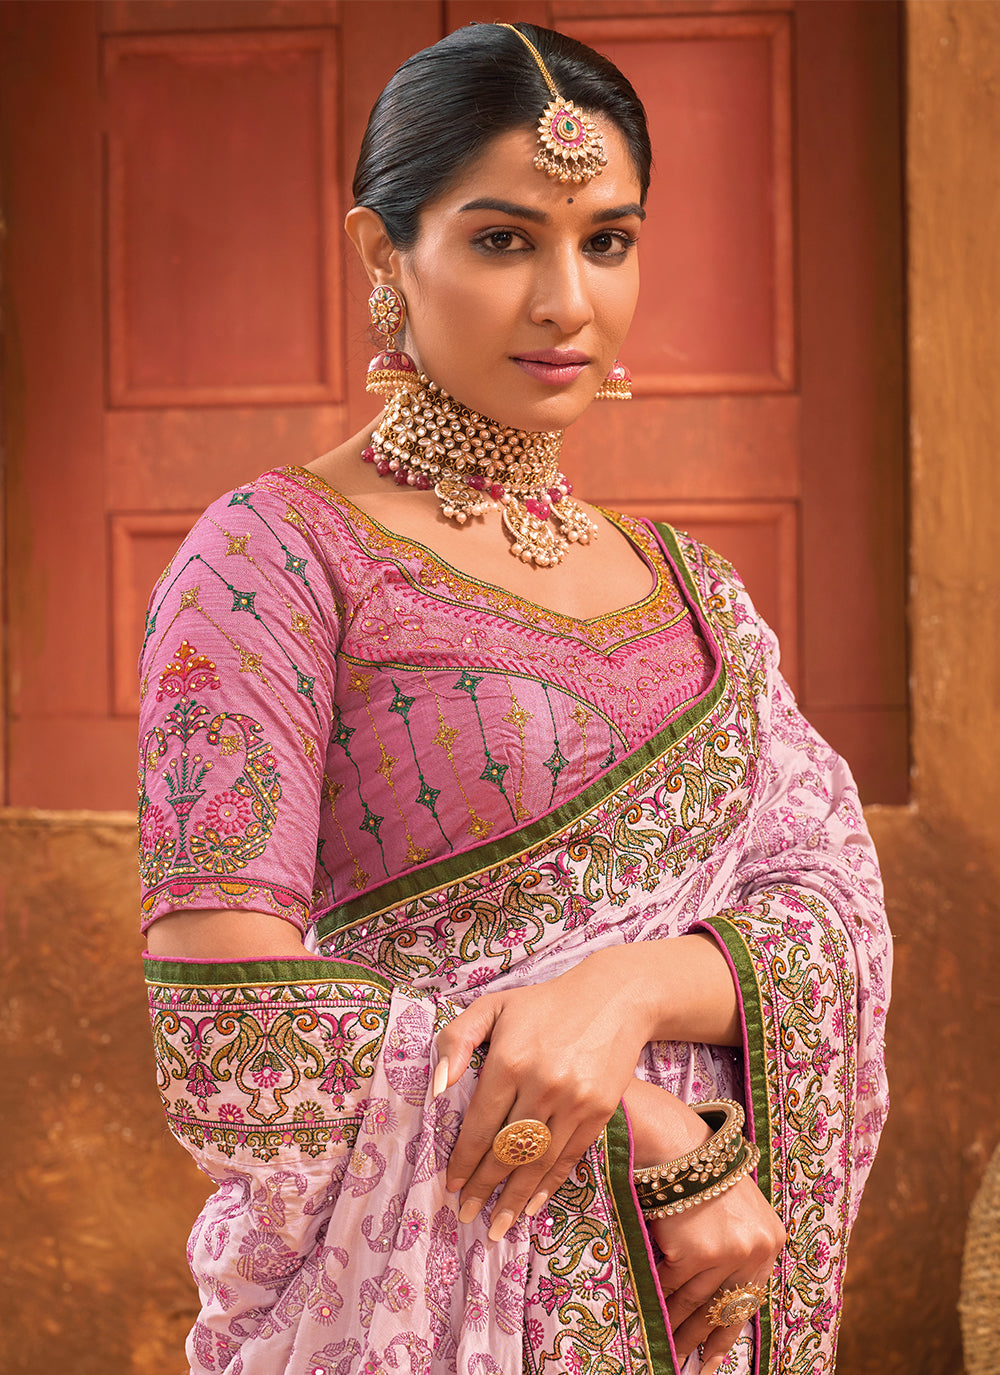 Lavender Banarasi Silk Diamond, Hand And Mirror Work Classic Sari For Women